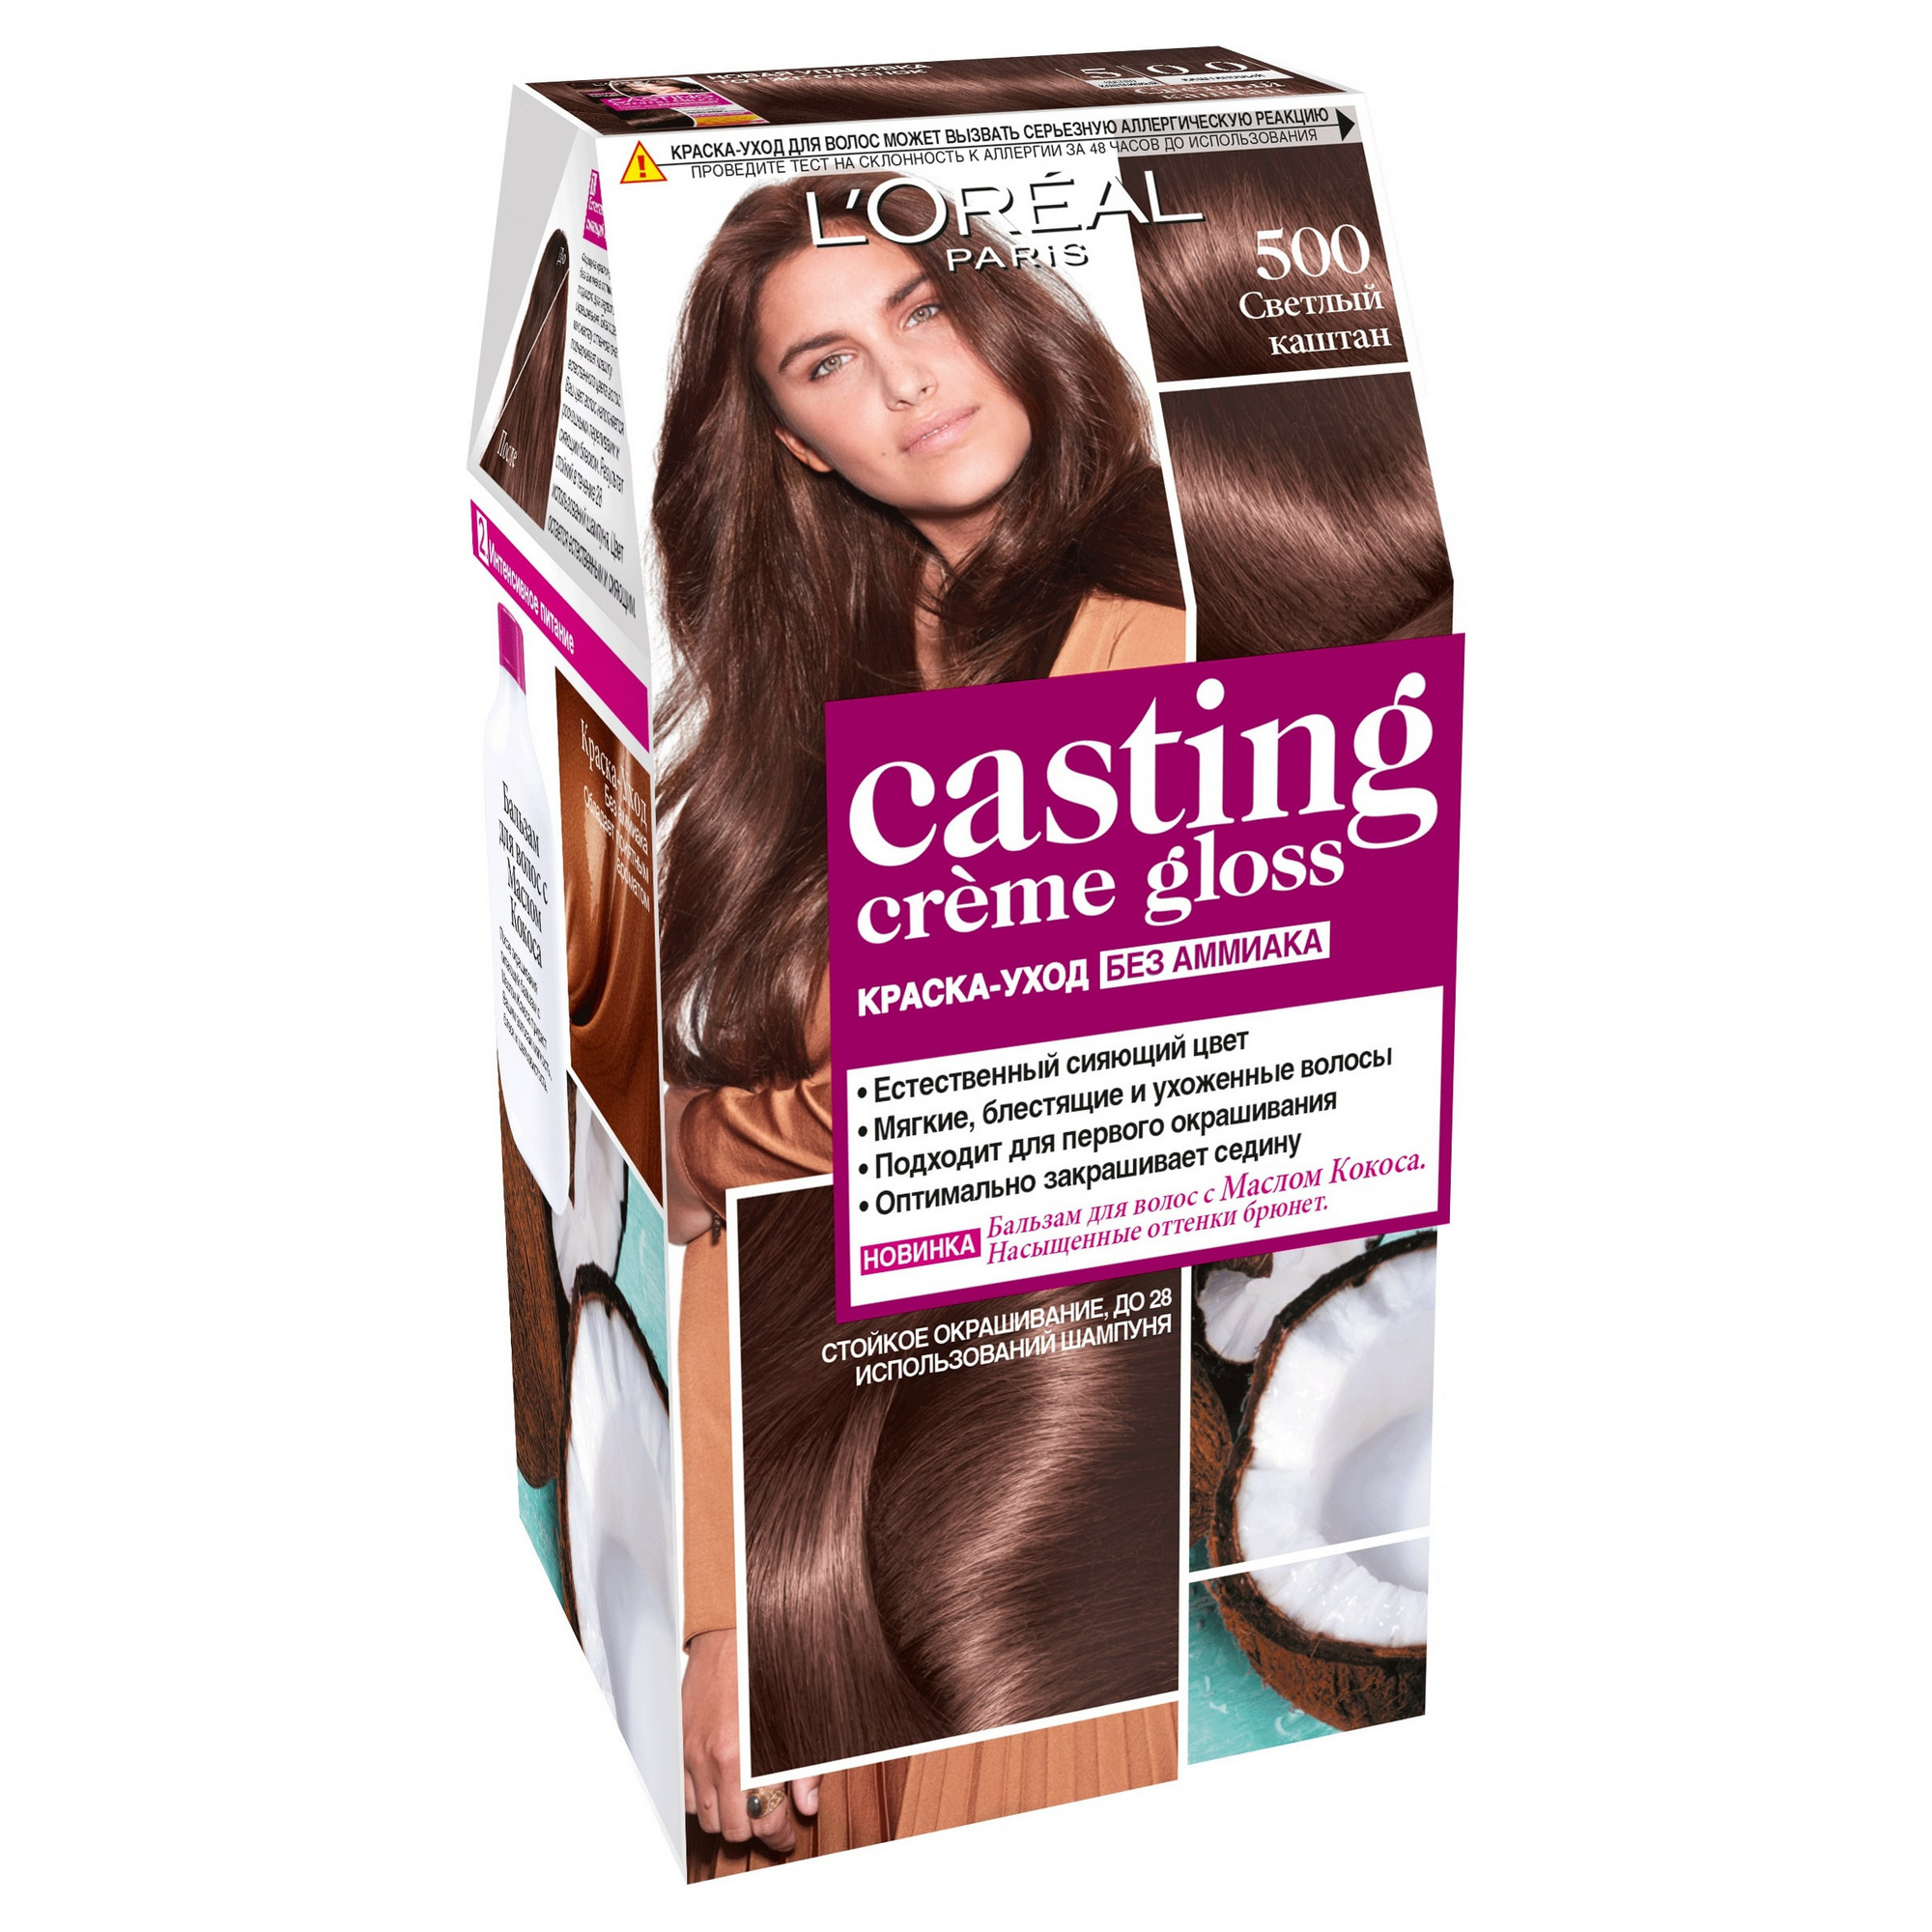 L'Oreal Paris casting Creme Gloss краска для волос без аммиака №500 (светлый каштан)